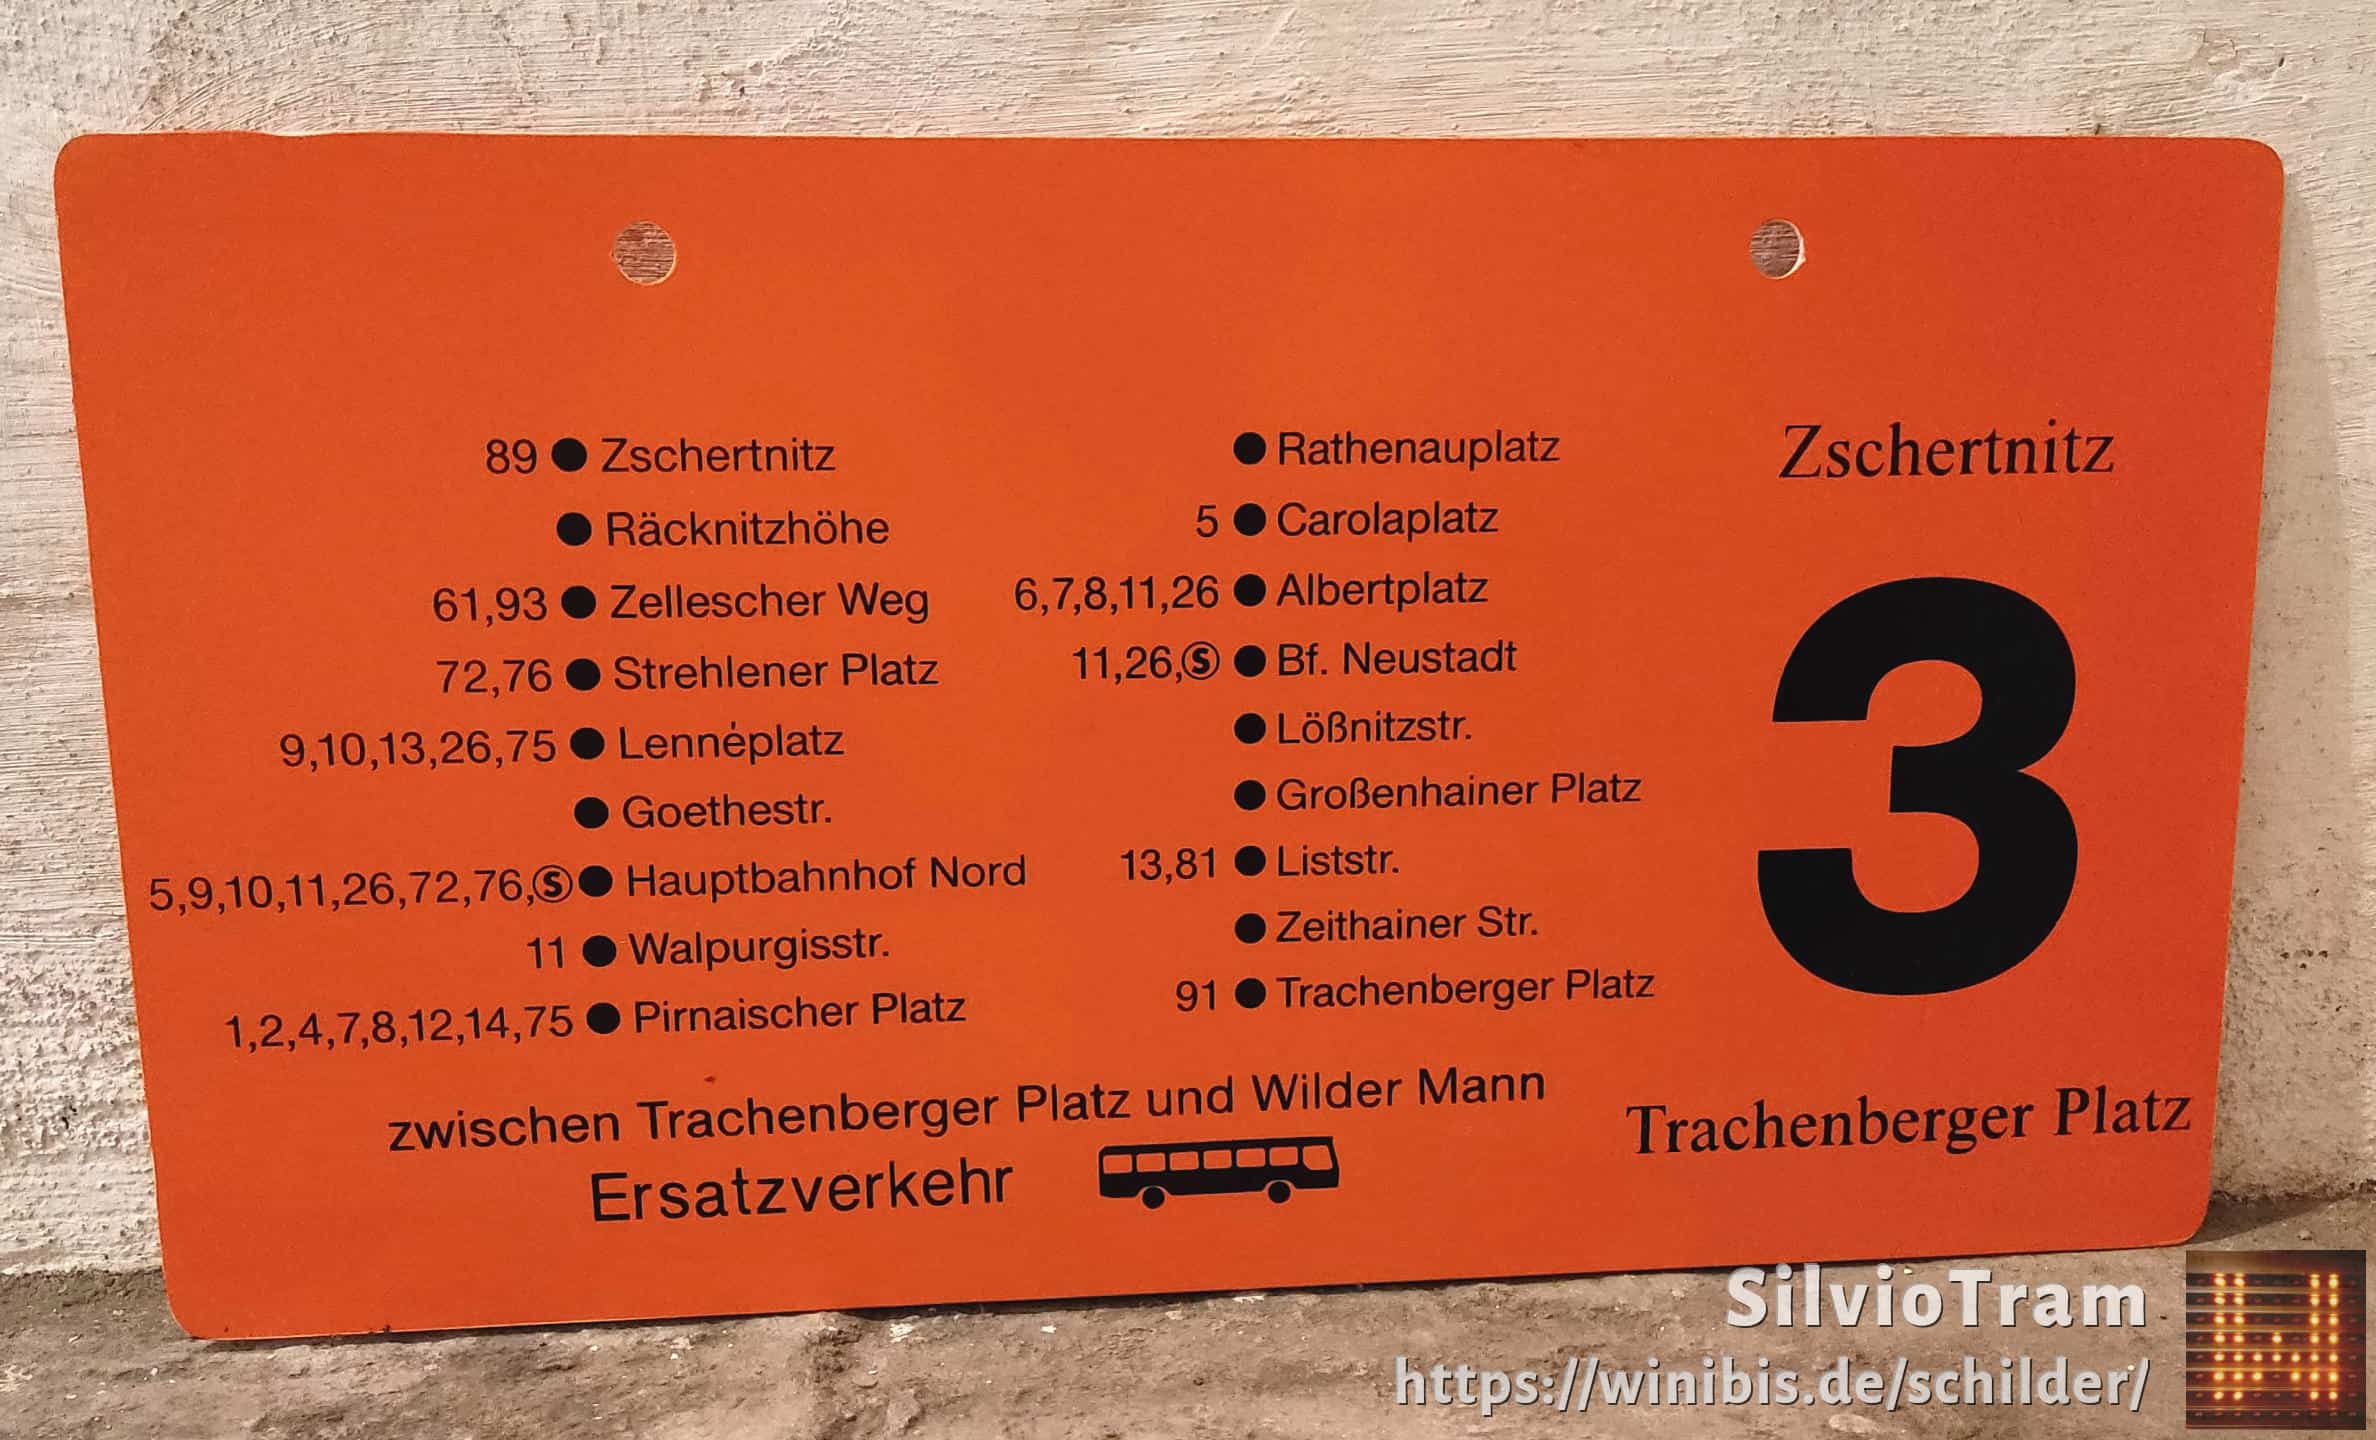 3 Zschertnitz – Trachenberger Platz #4